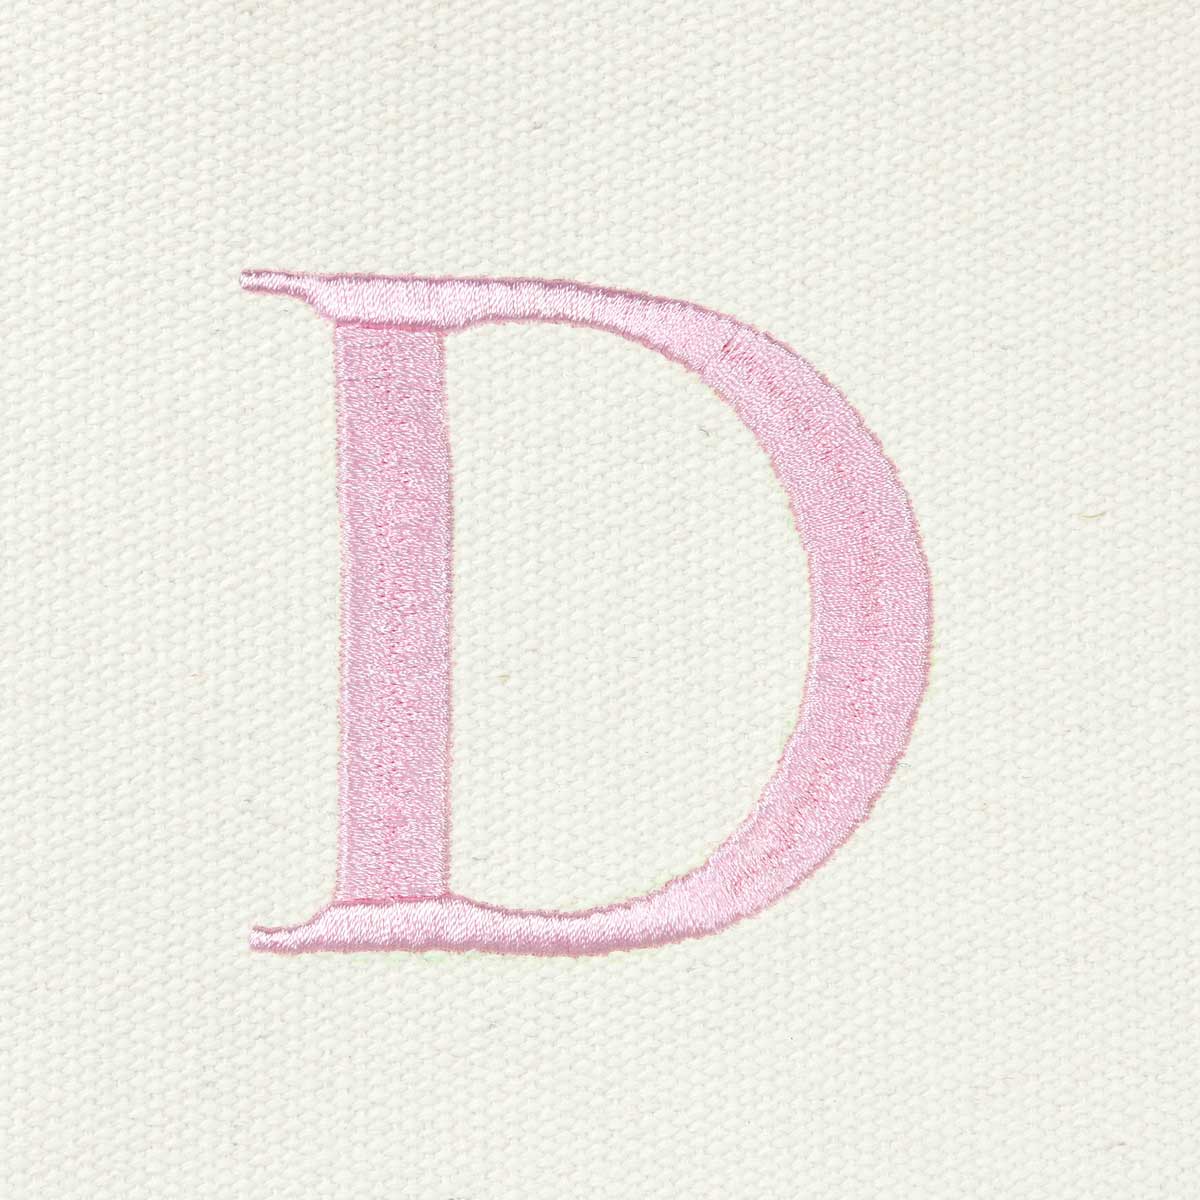 Dalix Medium Personalized Tote Bag Monogrammed Initial Letter - P Dark Green